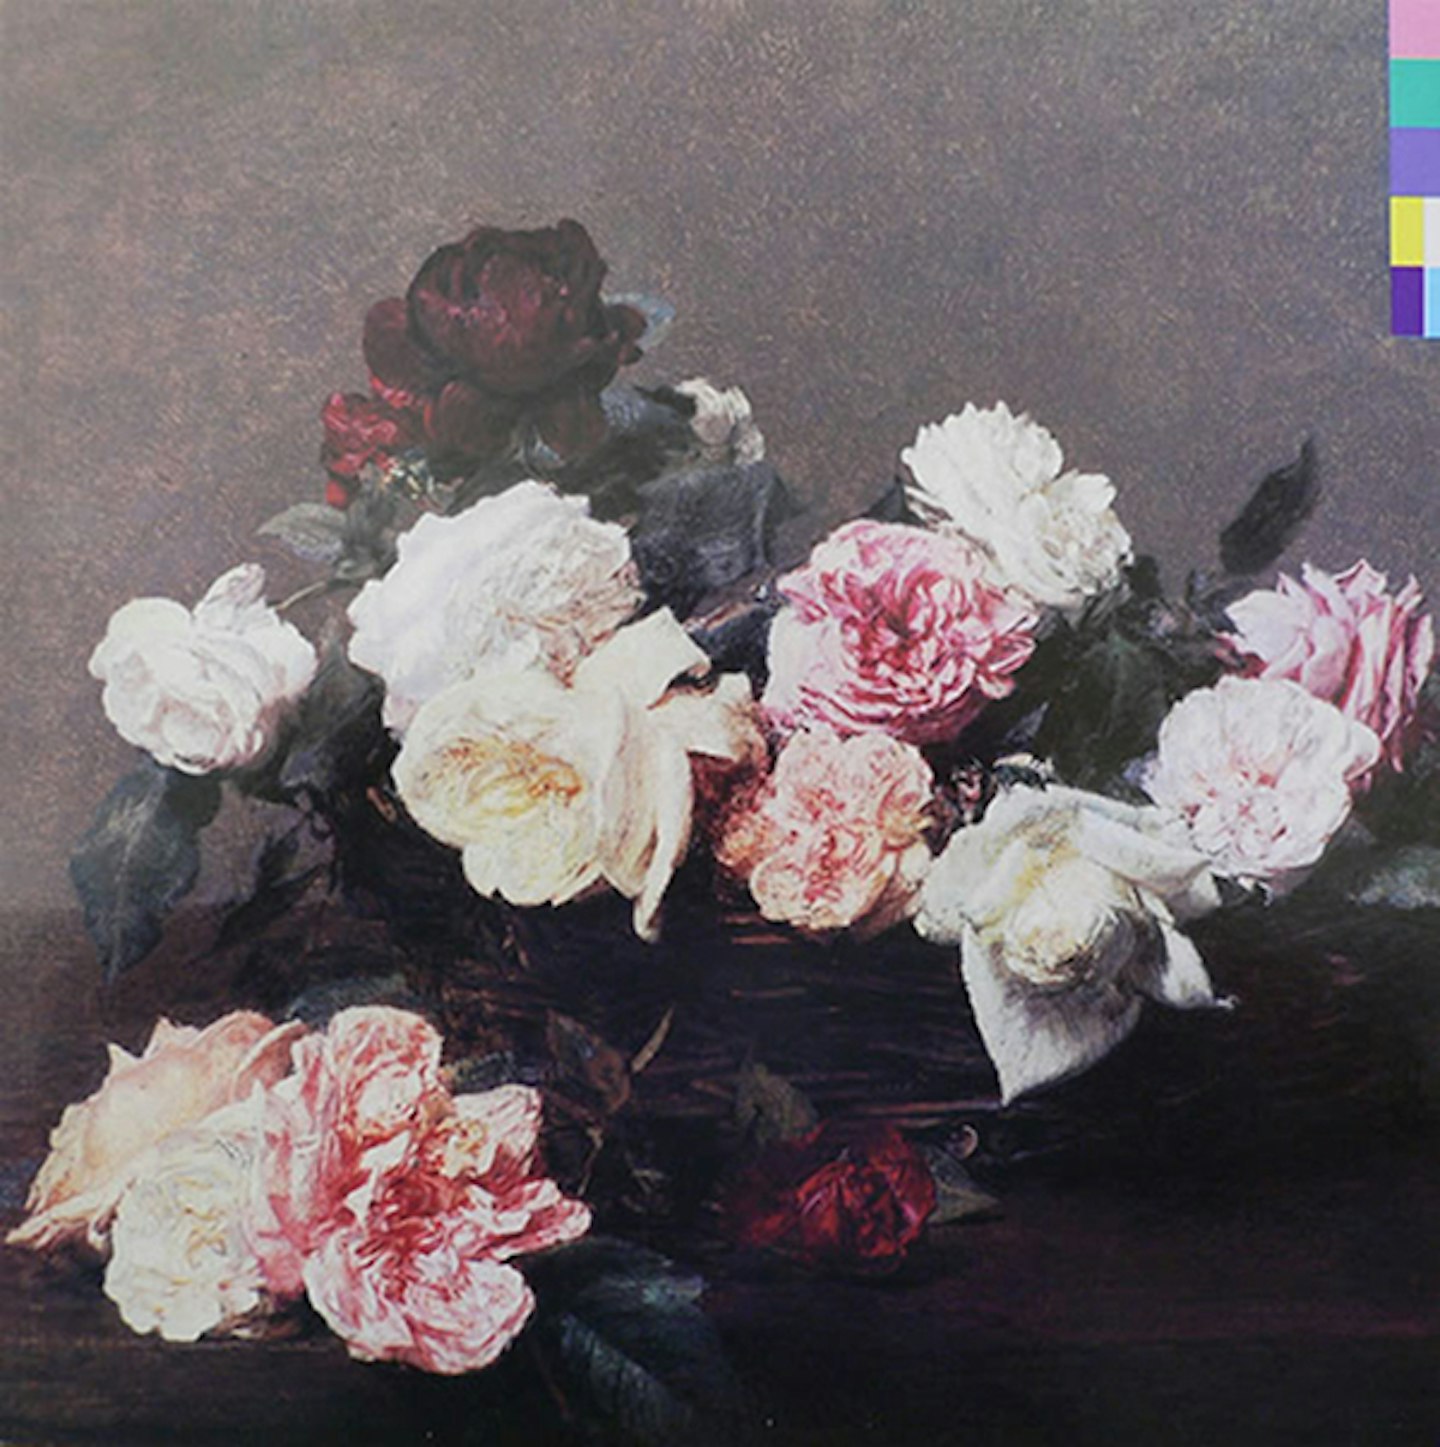 New Order's 30 greatest tracks – ranked!, New Order